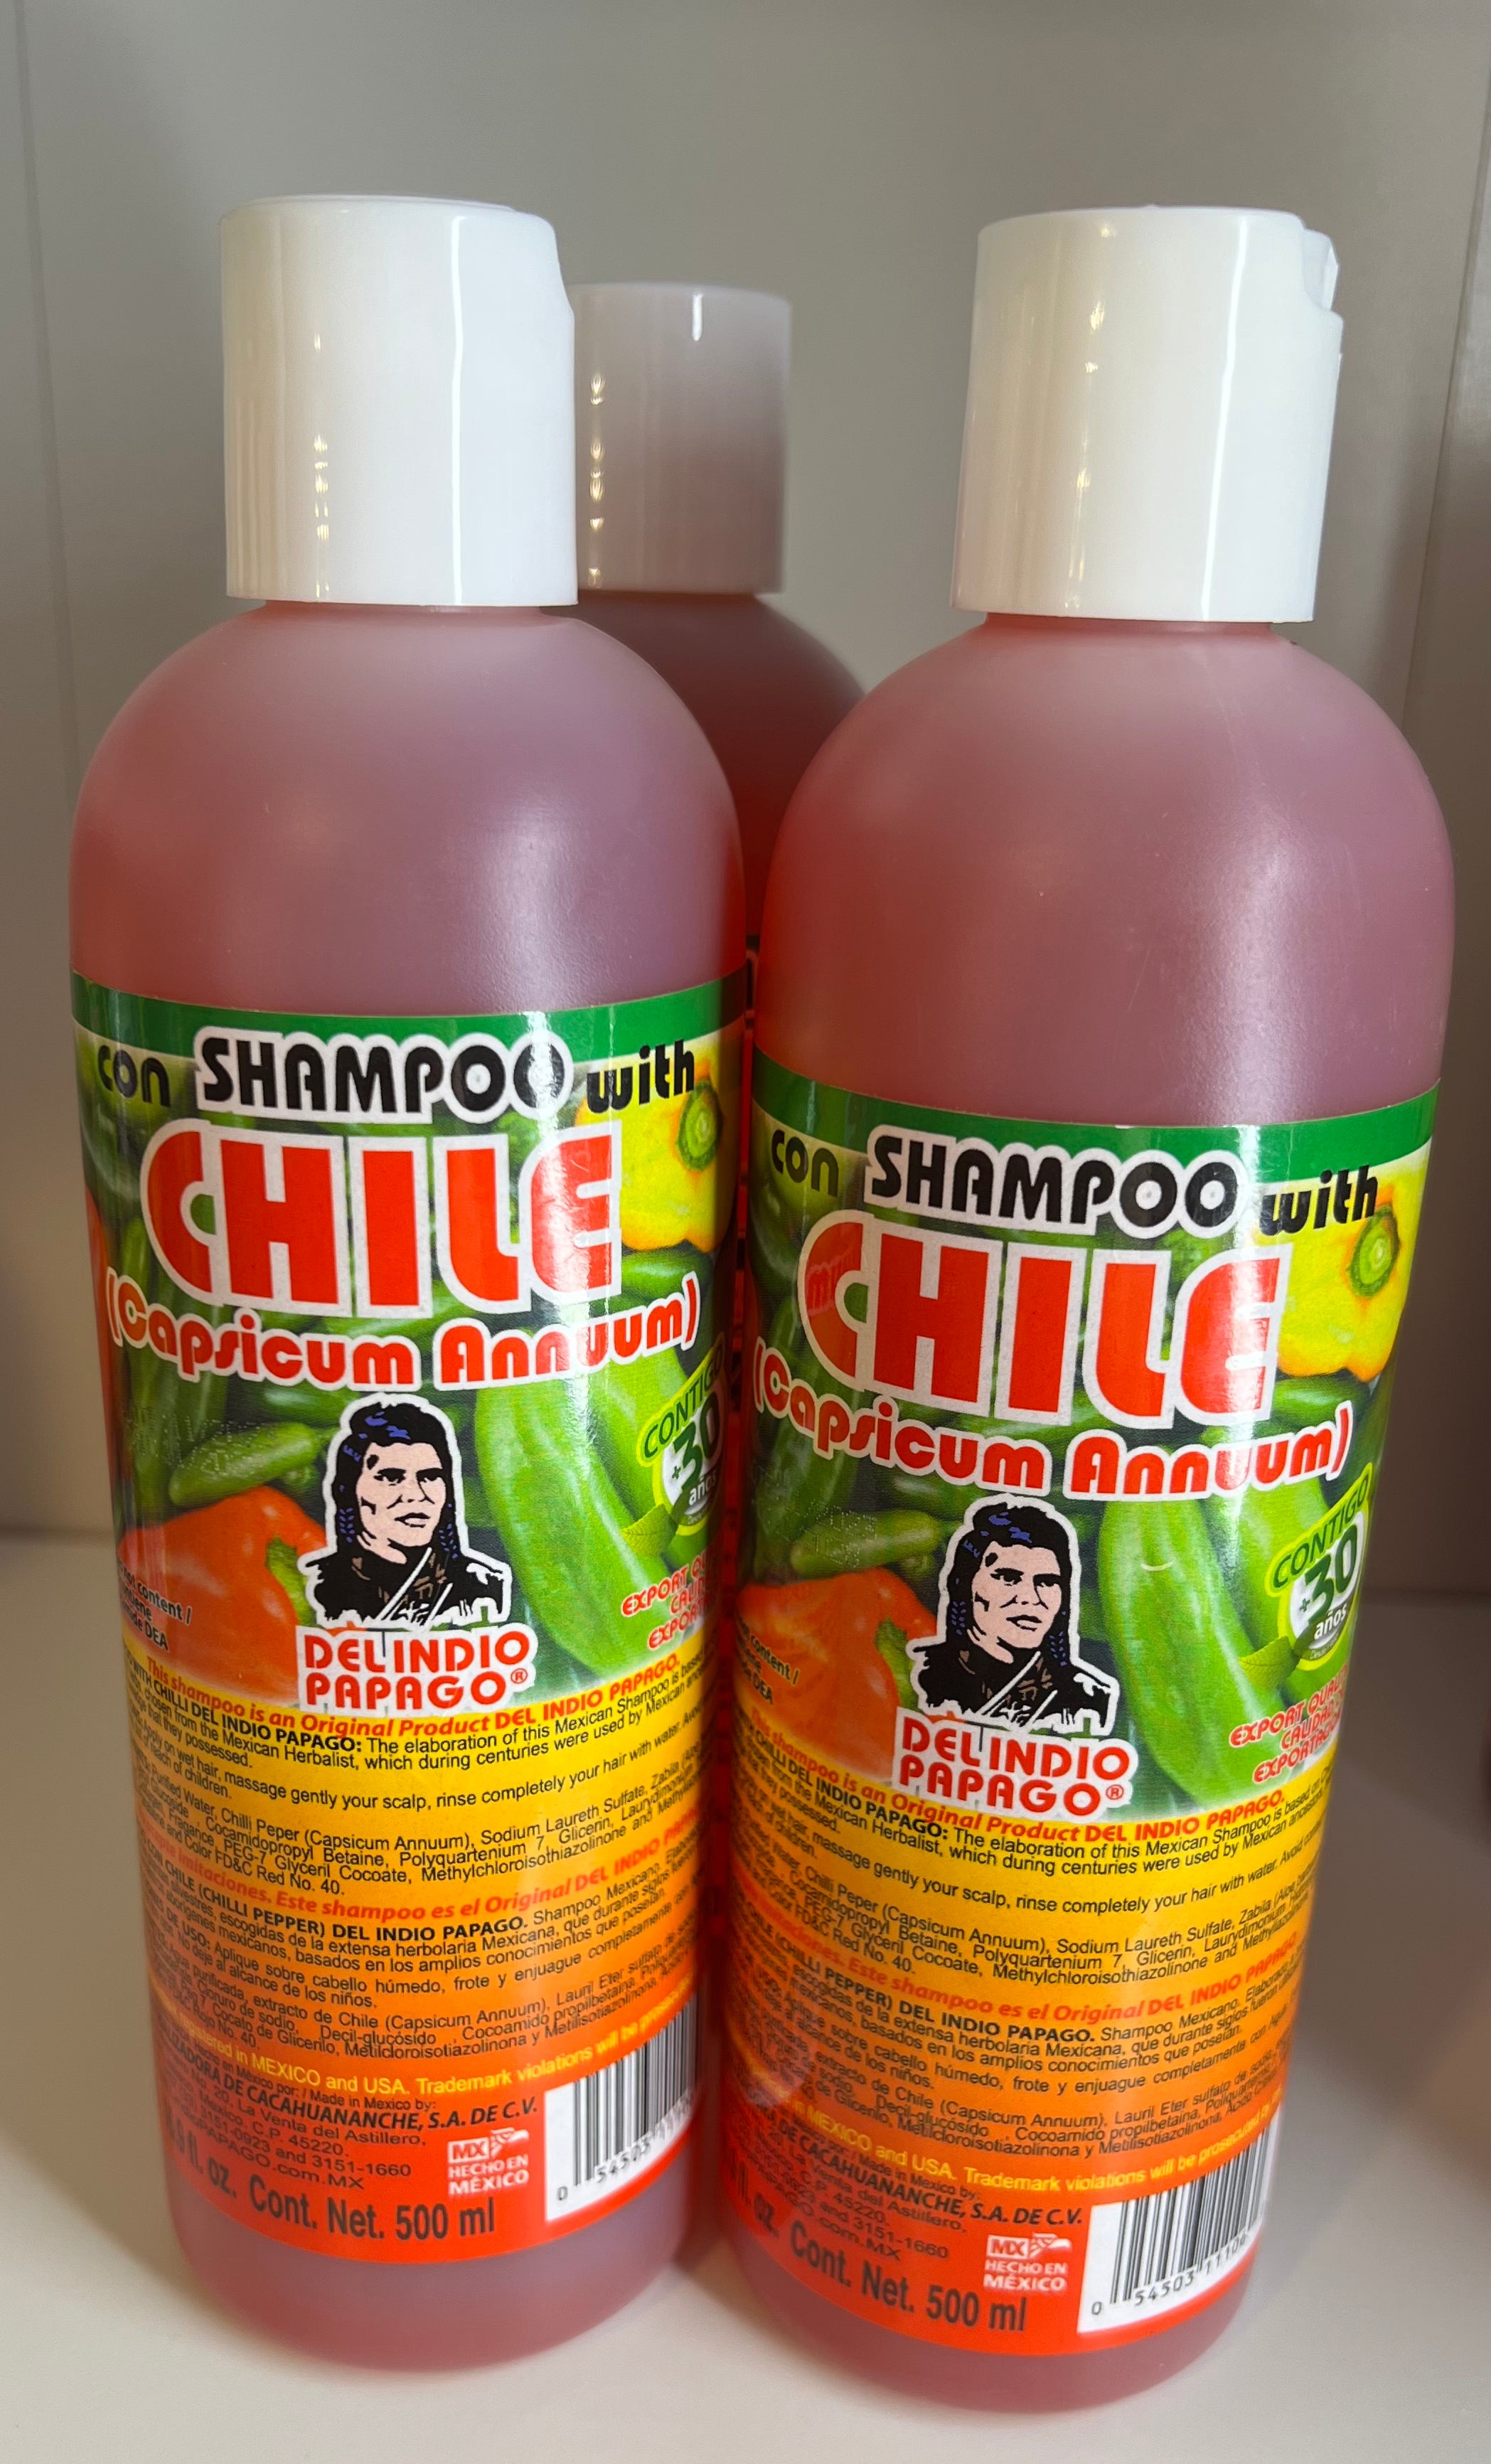 Chile Herbal Shampoo